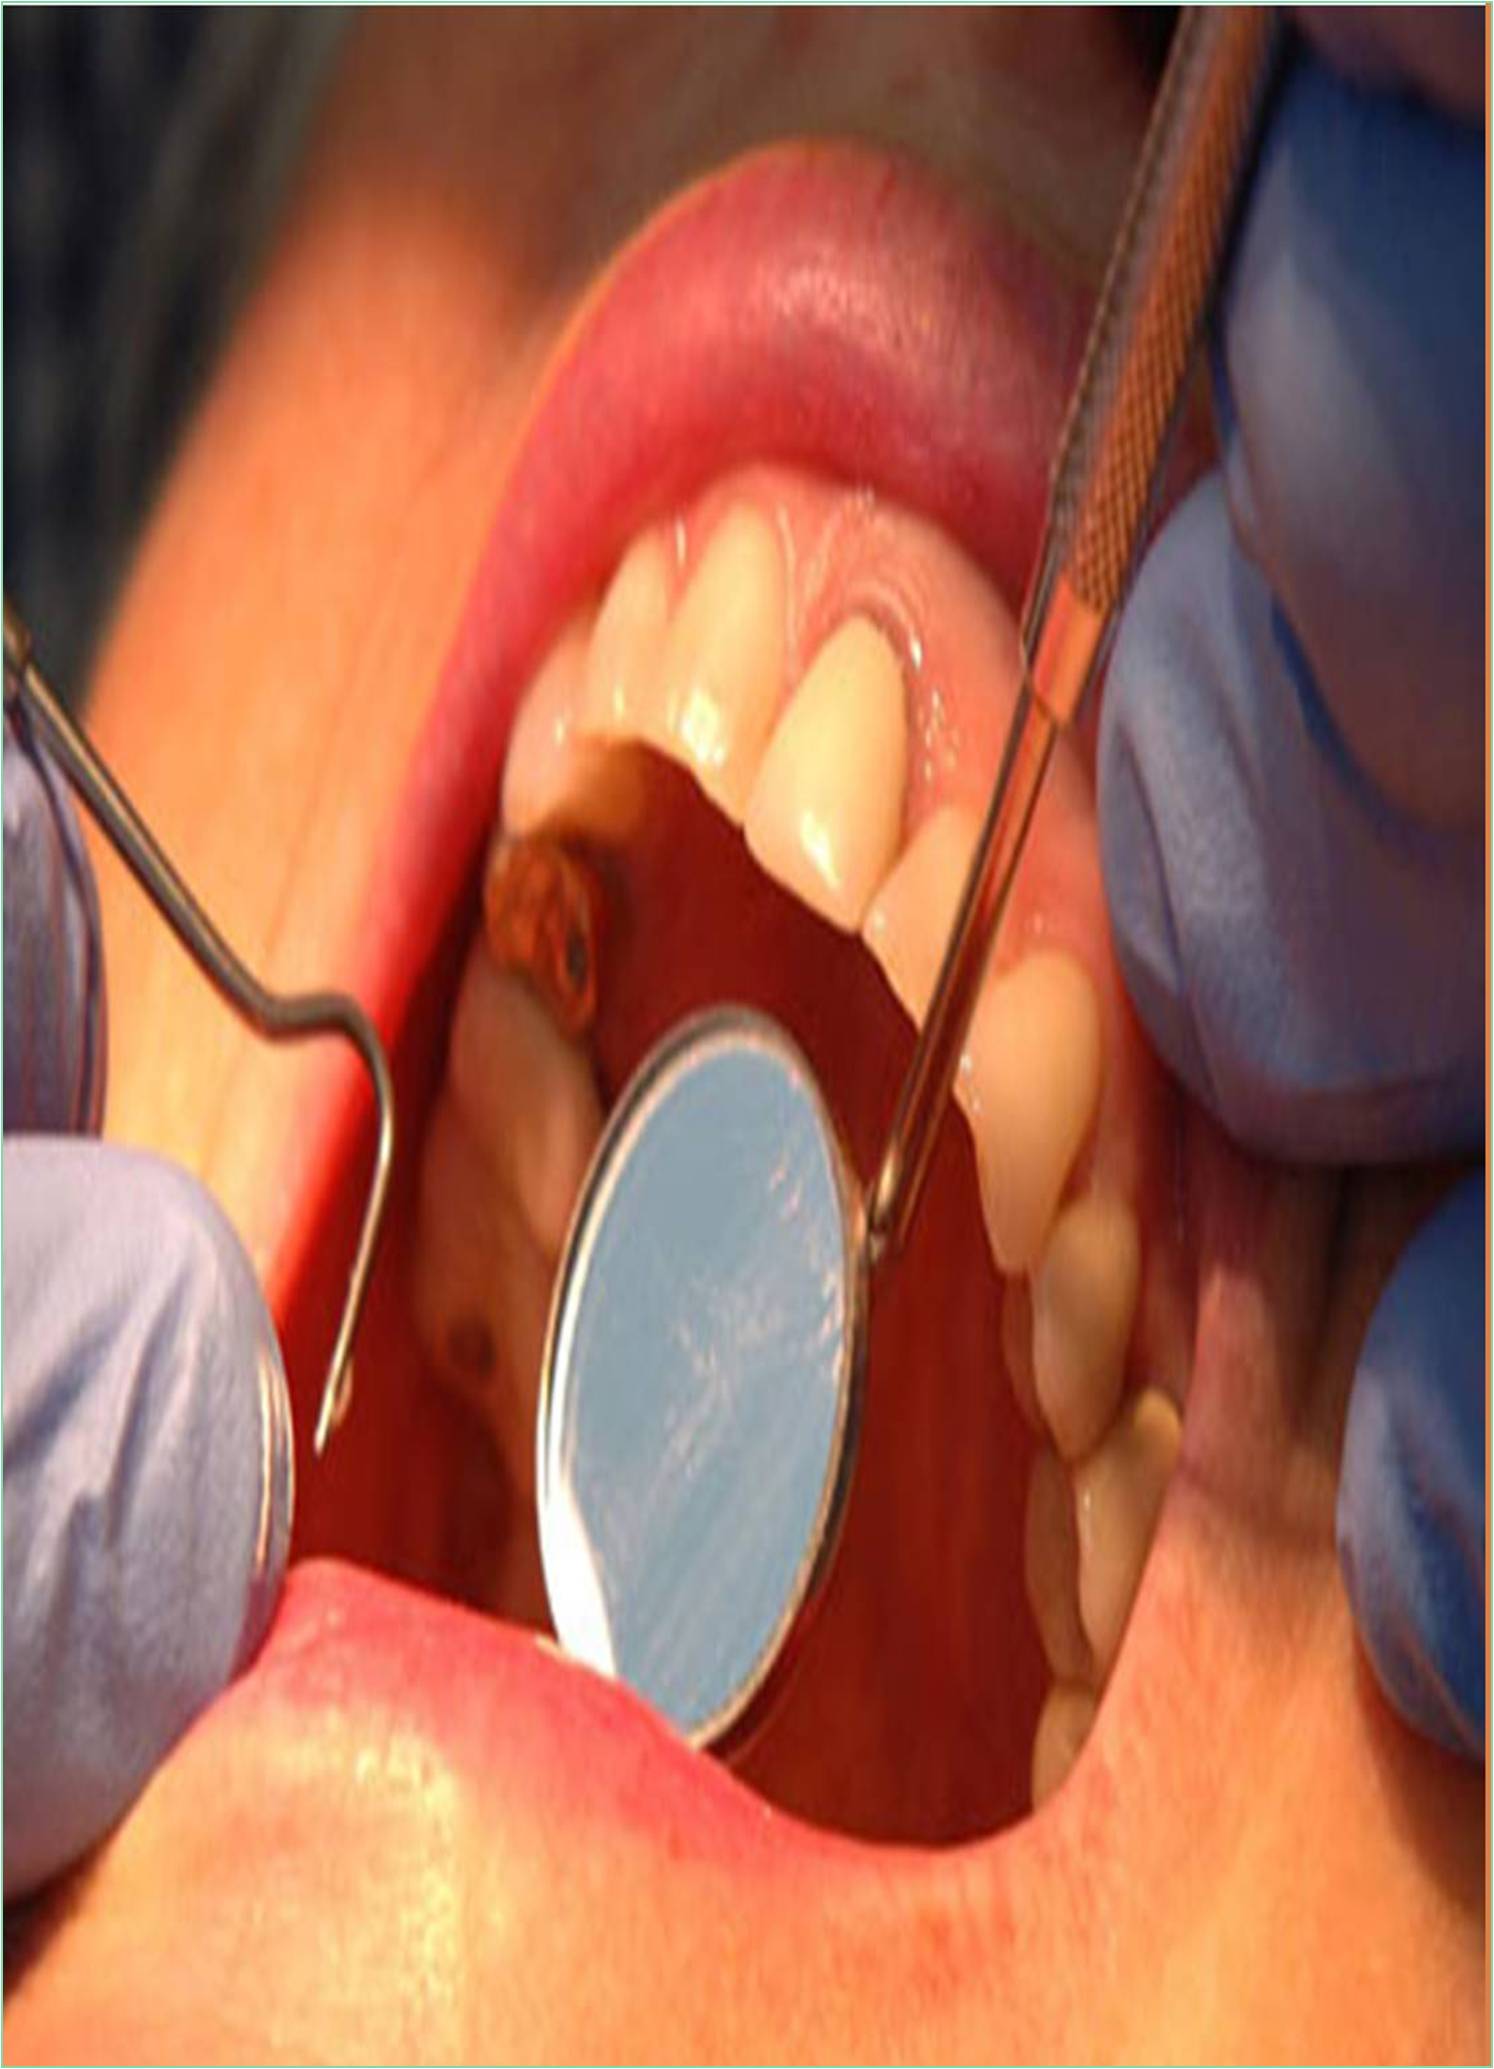 global-journal-of-dentistry-and-oral-hygiene-banner.jpg